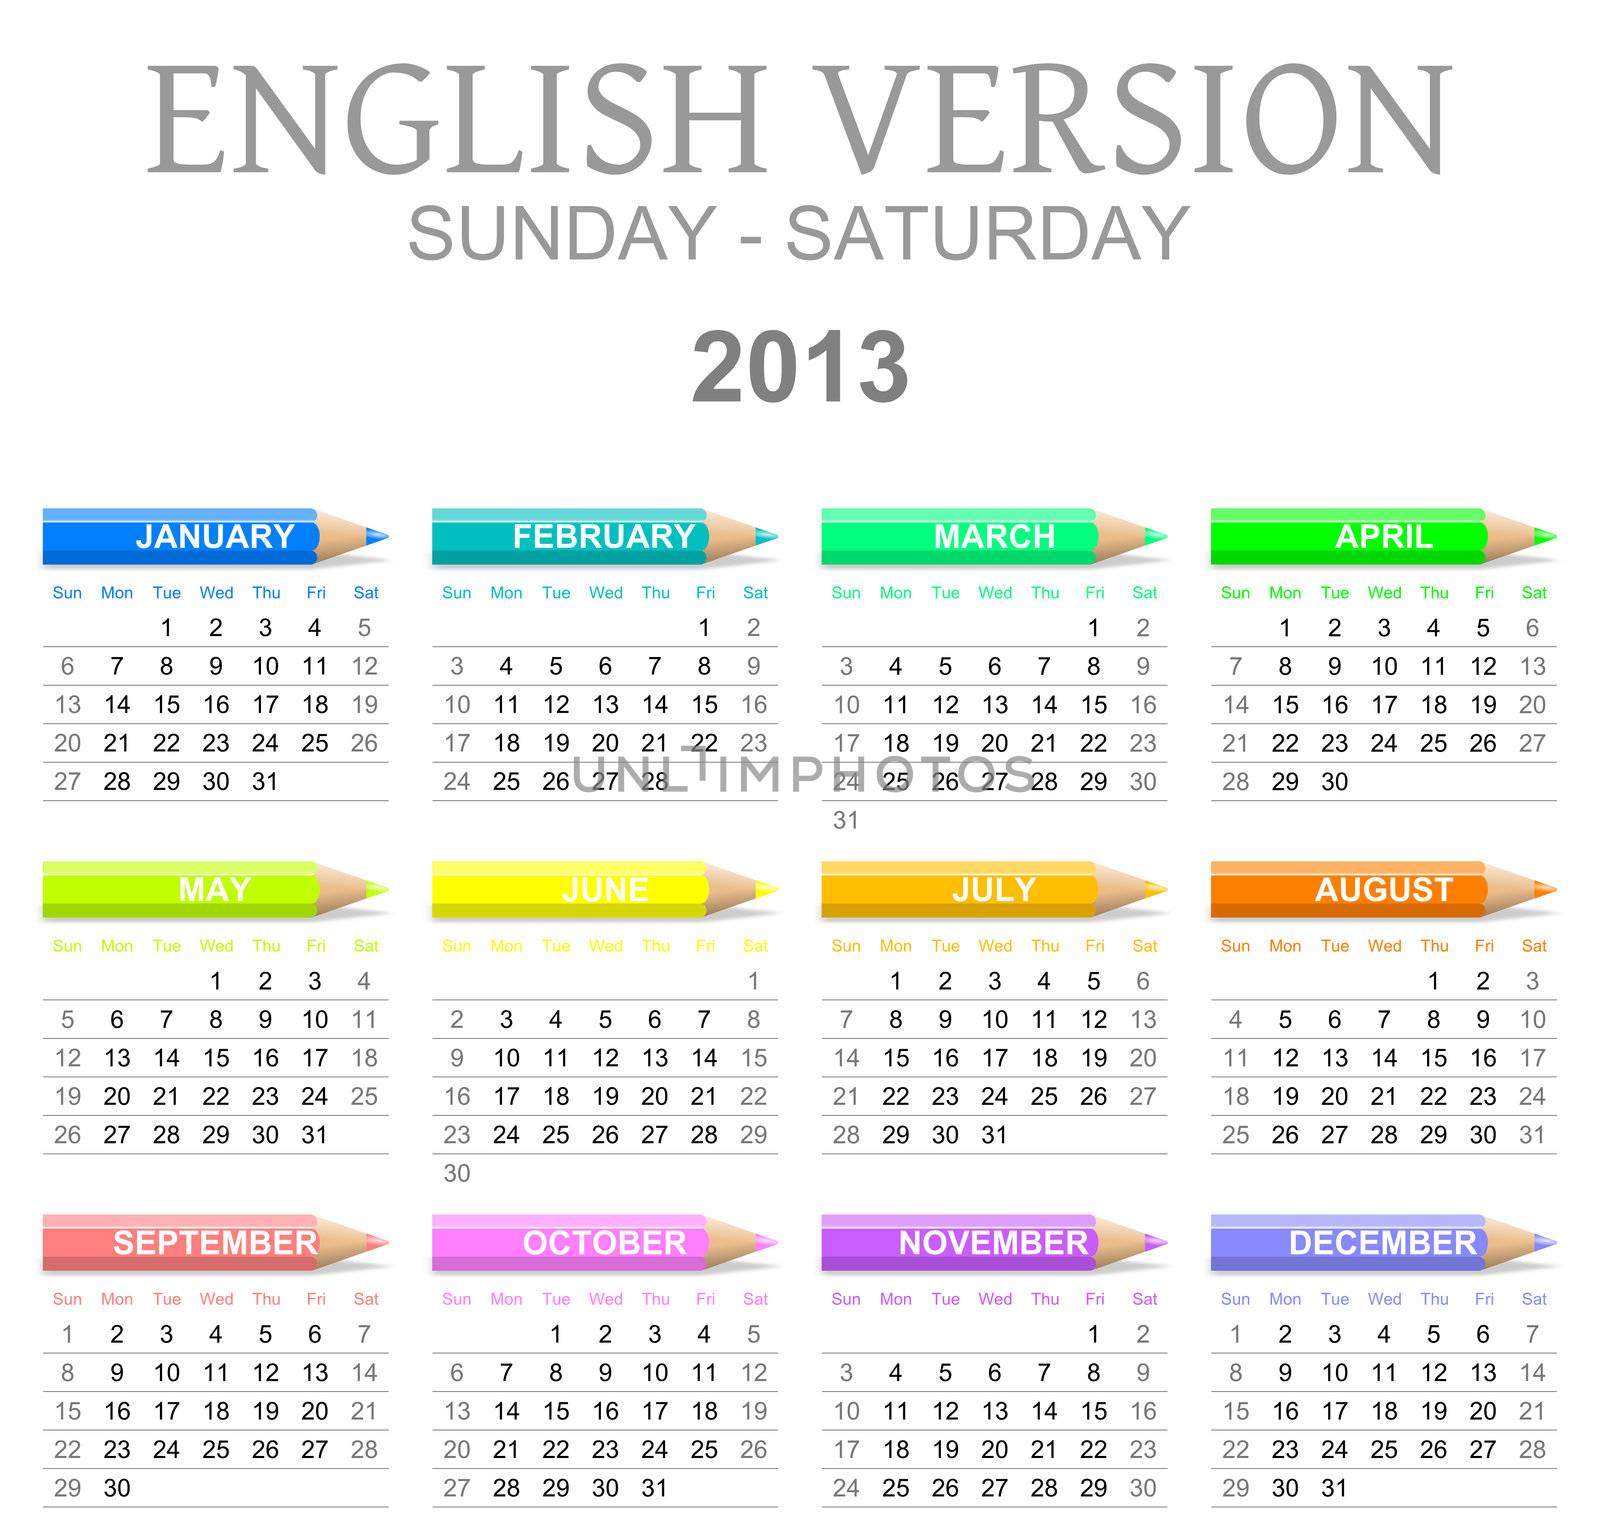 2013 crayons calendar english version sun - sat by make